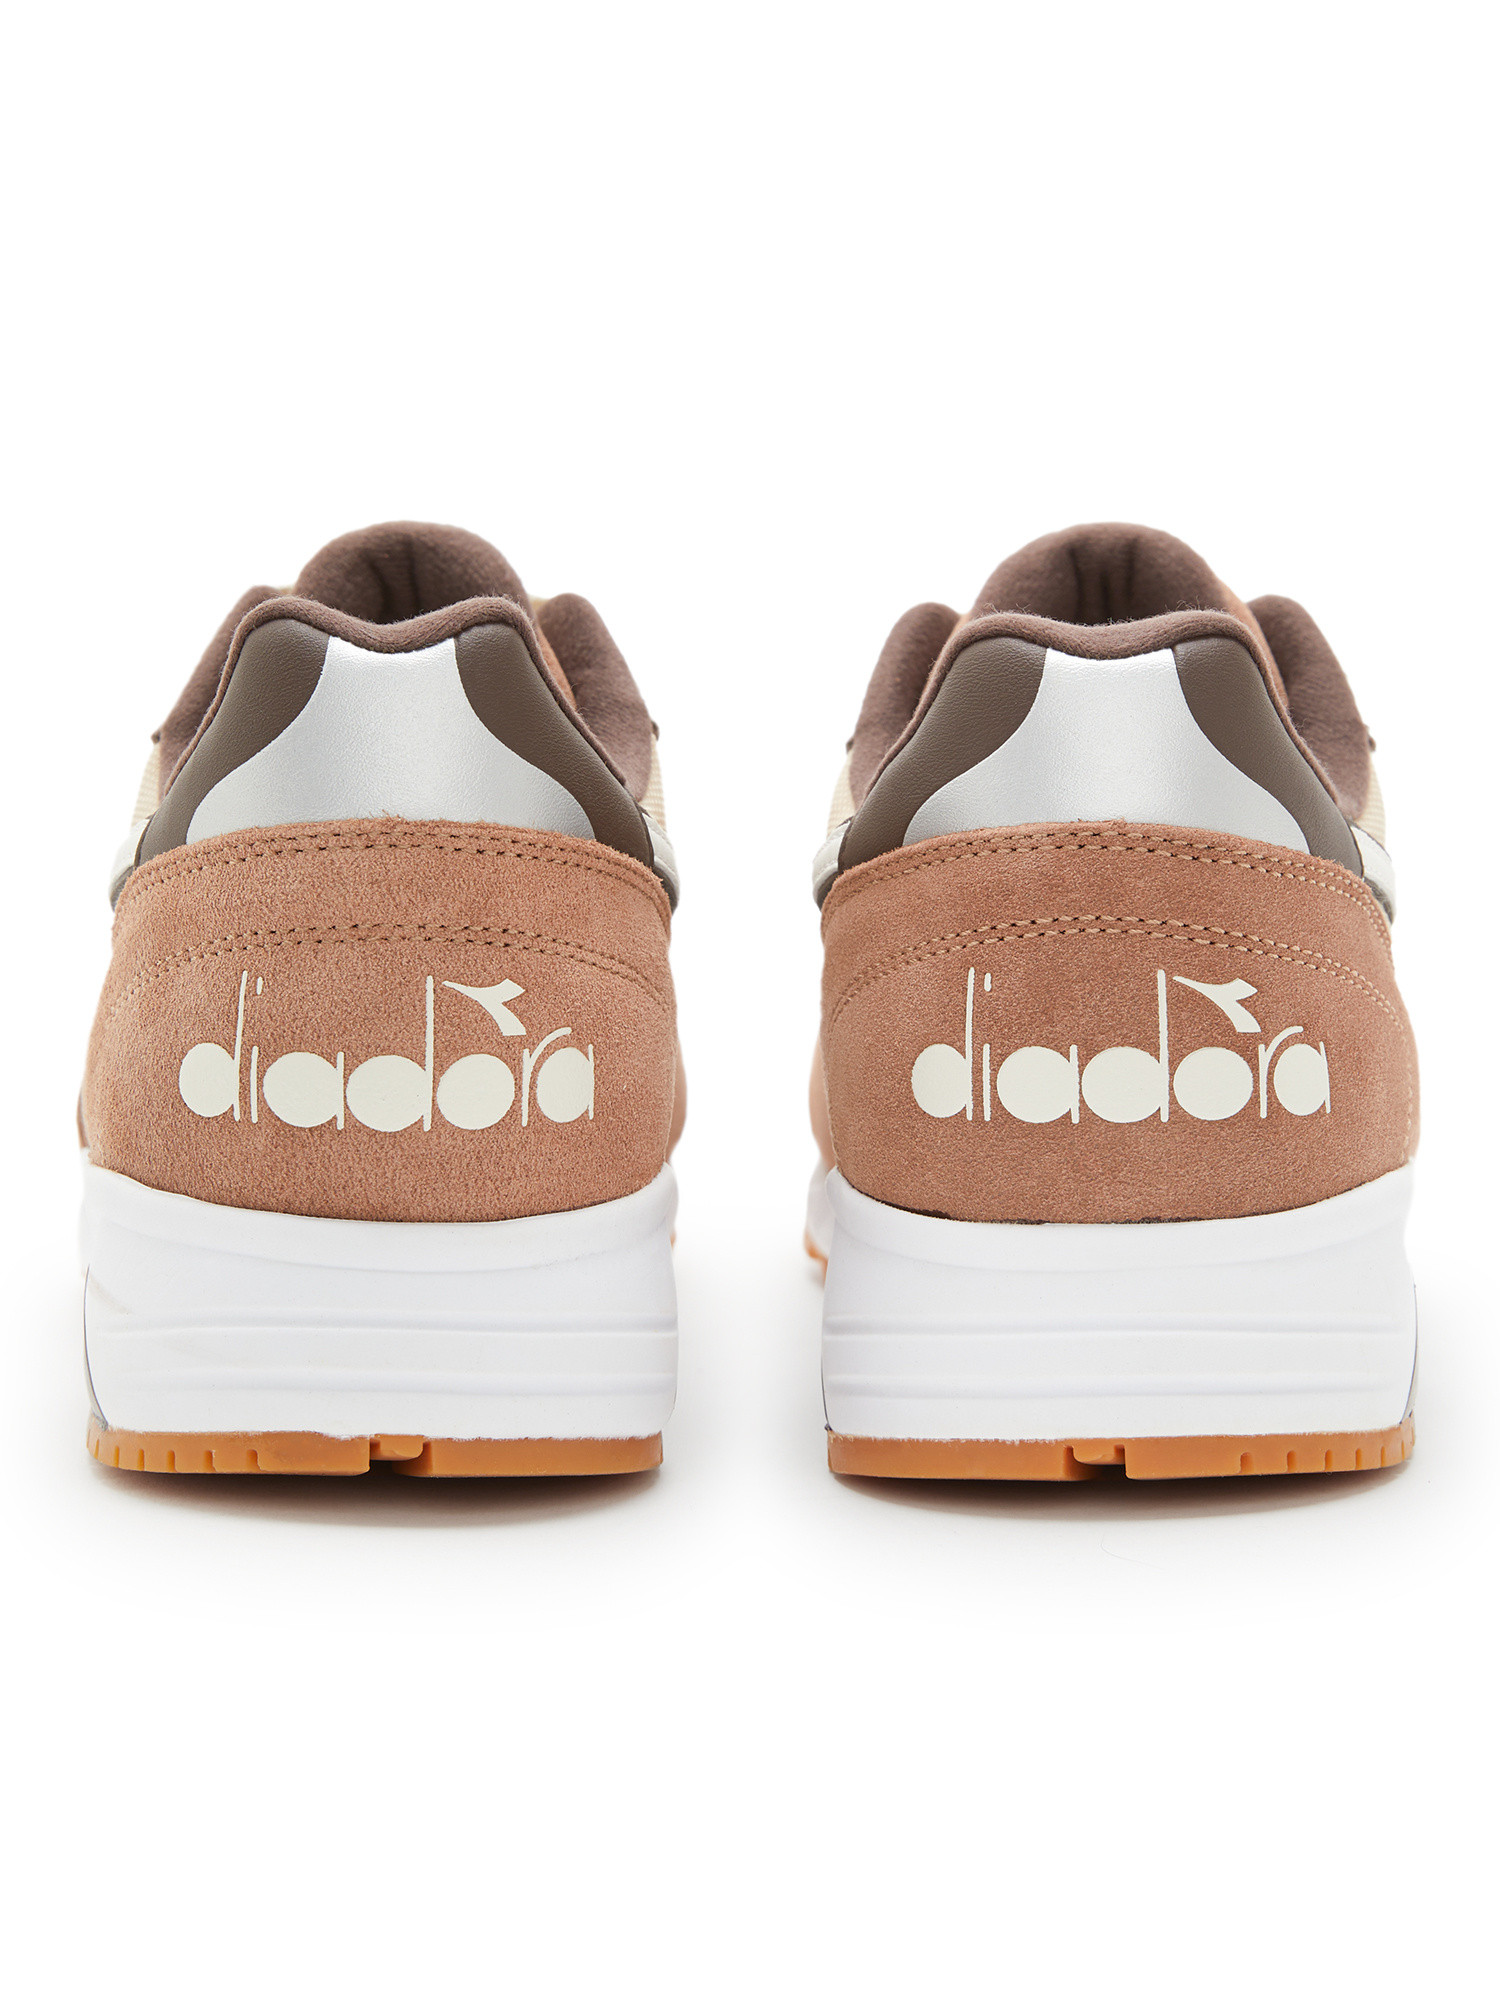 Diadora - Shoes N902, Sand, large image number 3